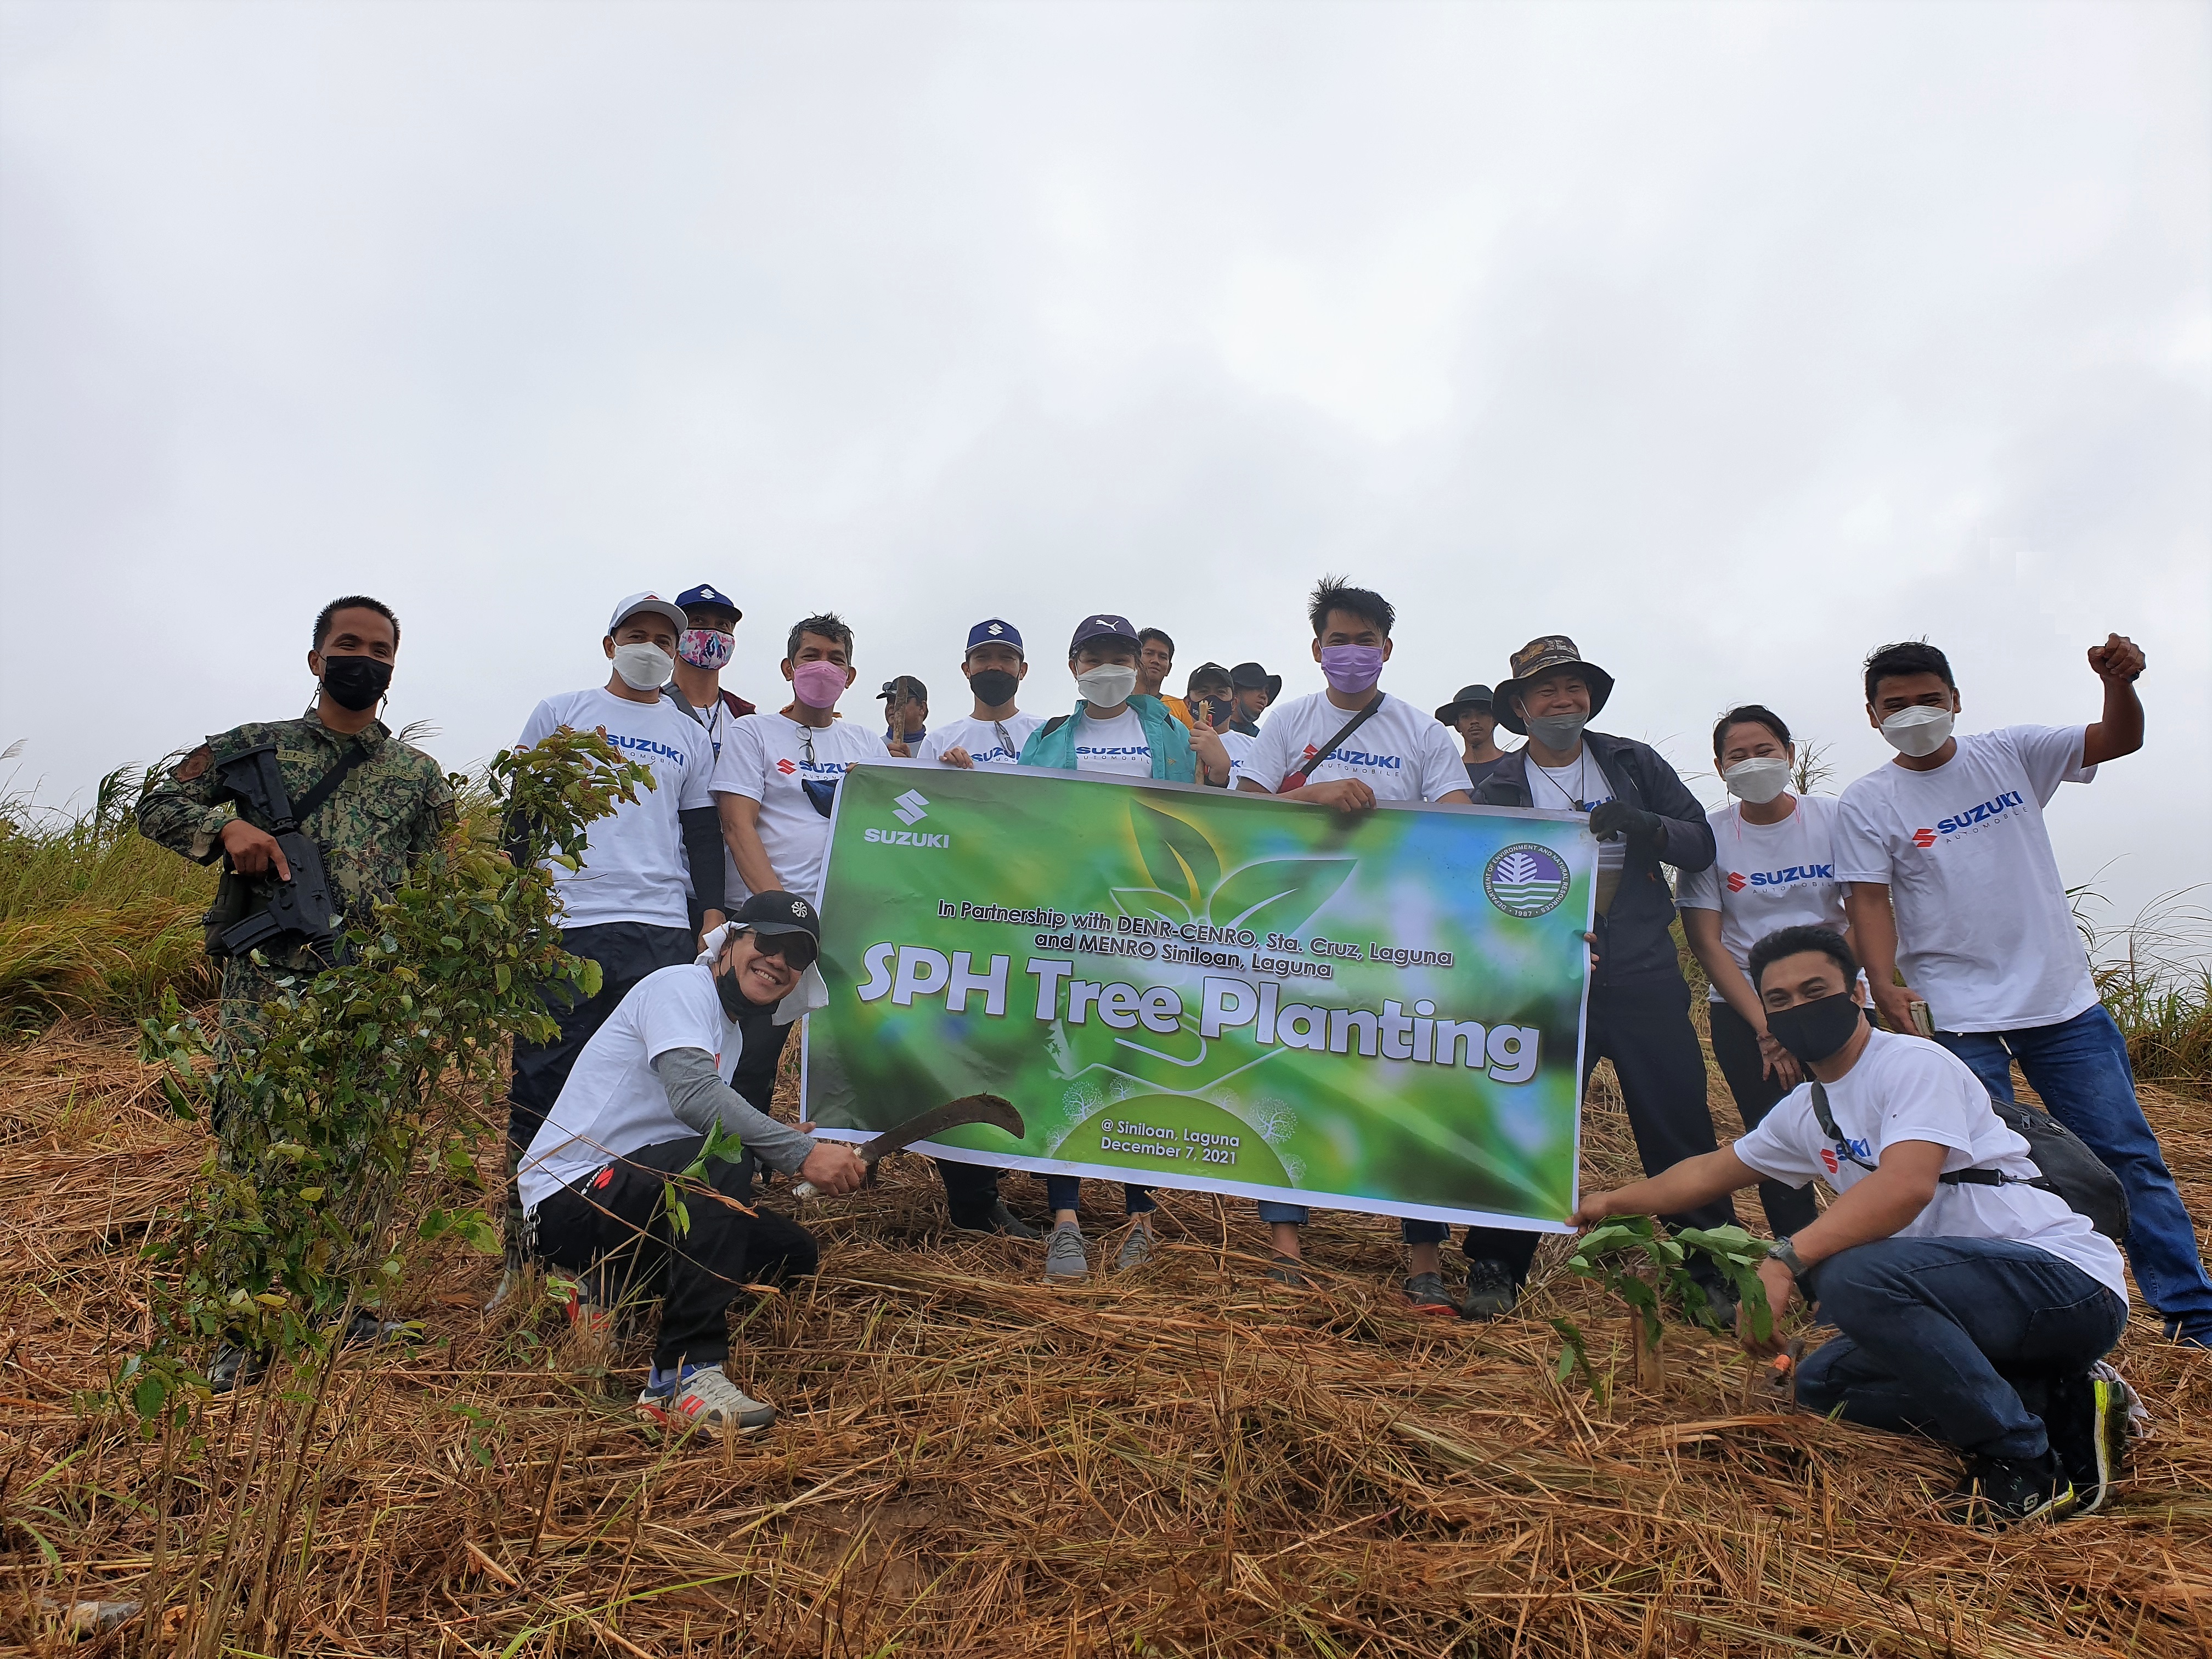 SPH with DENR-CENRO Tree Planting at Siniloan Laguna, December 2021